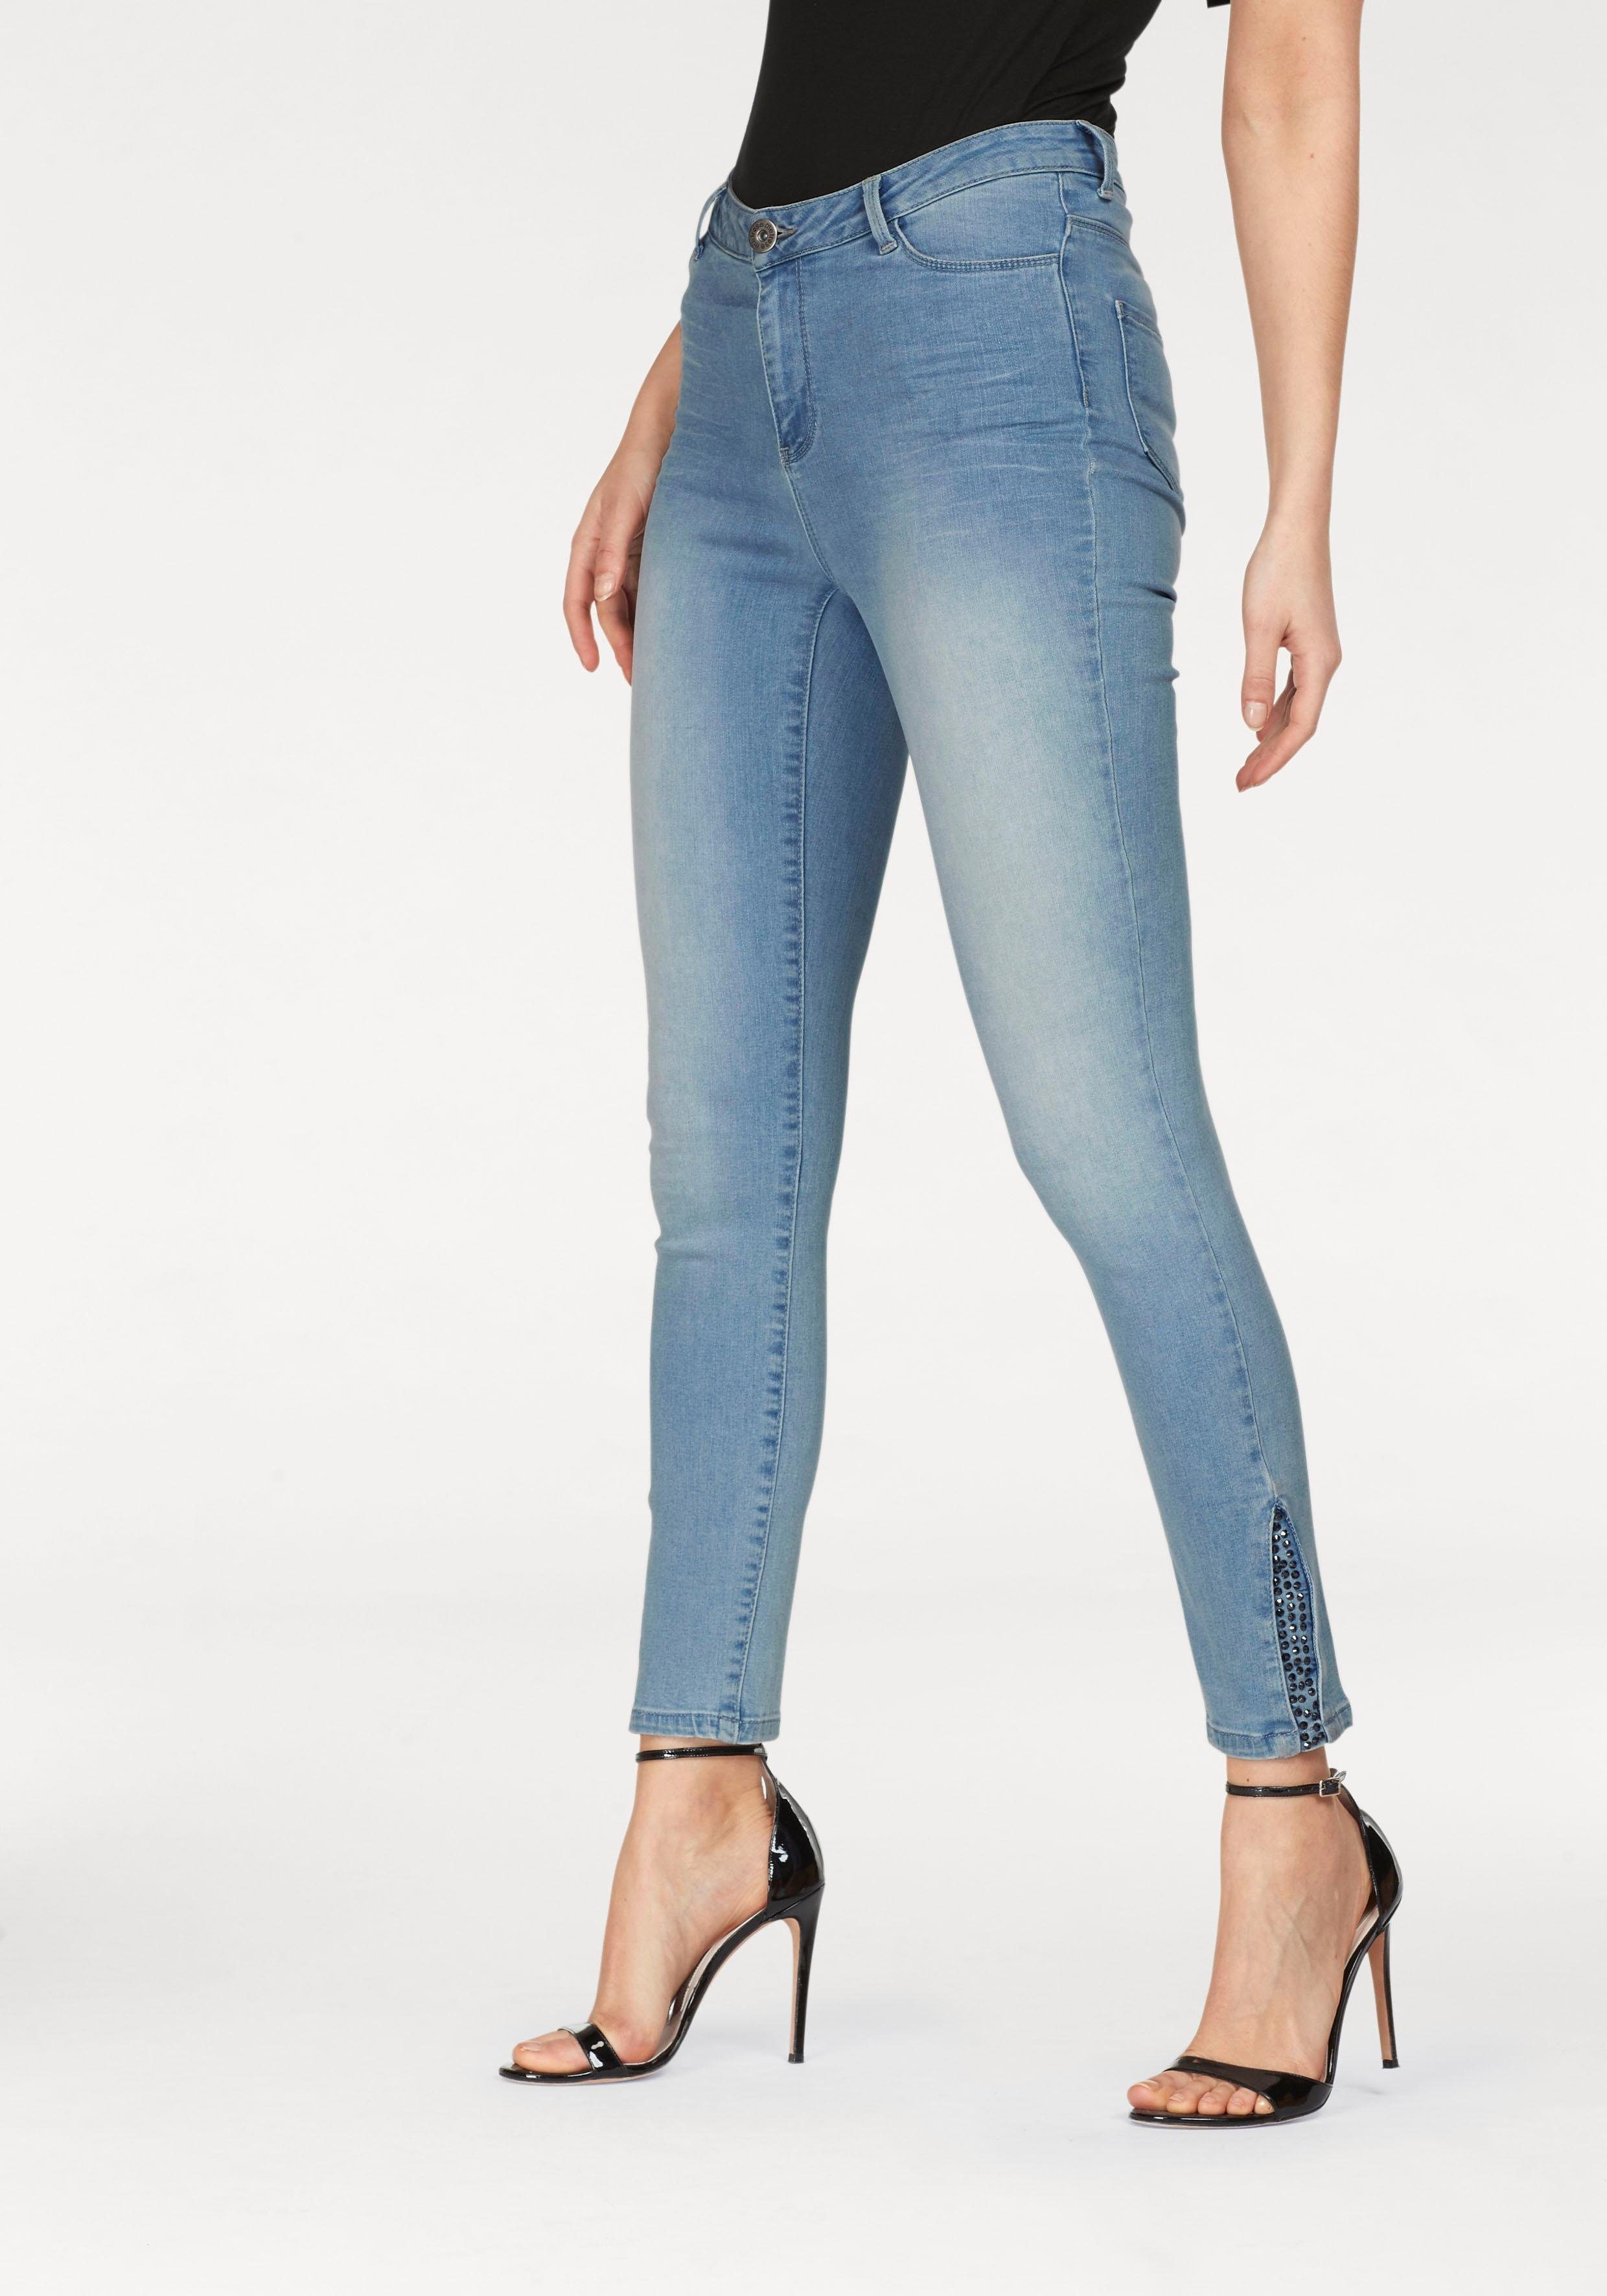 Otto - melrose NU 15% KORTING: Melrose stretch jeans